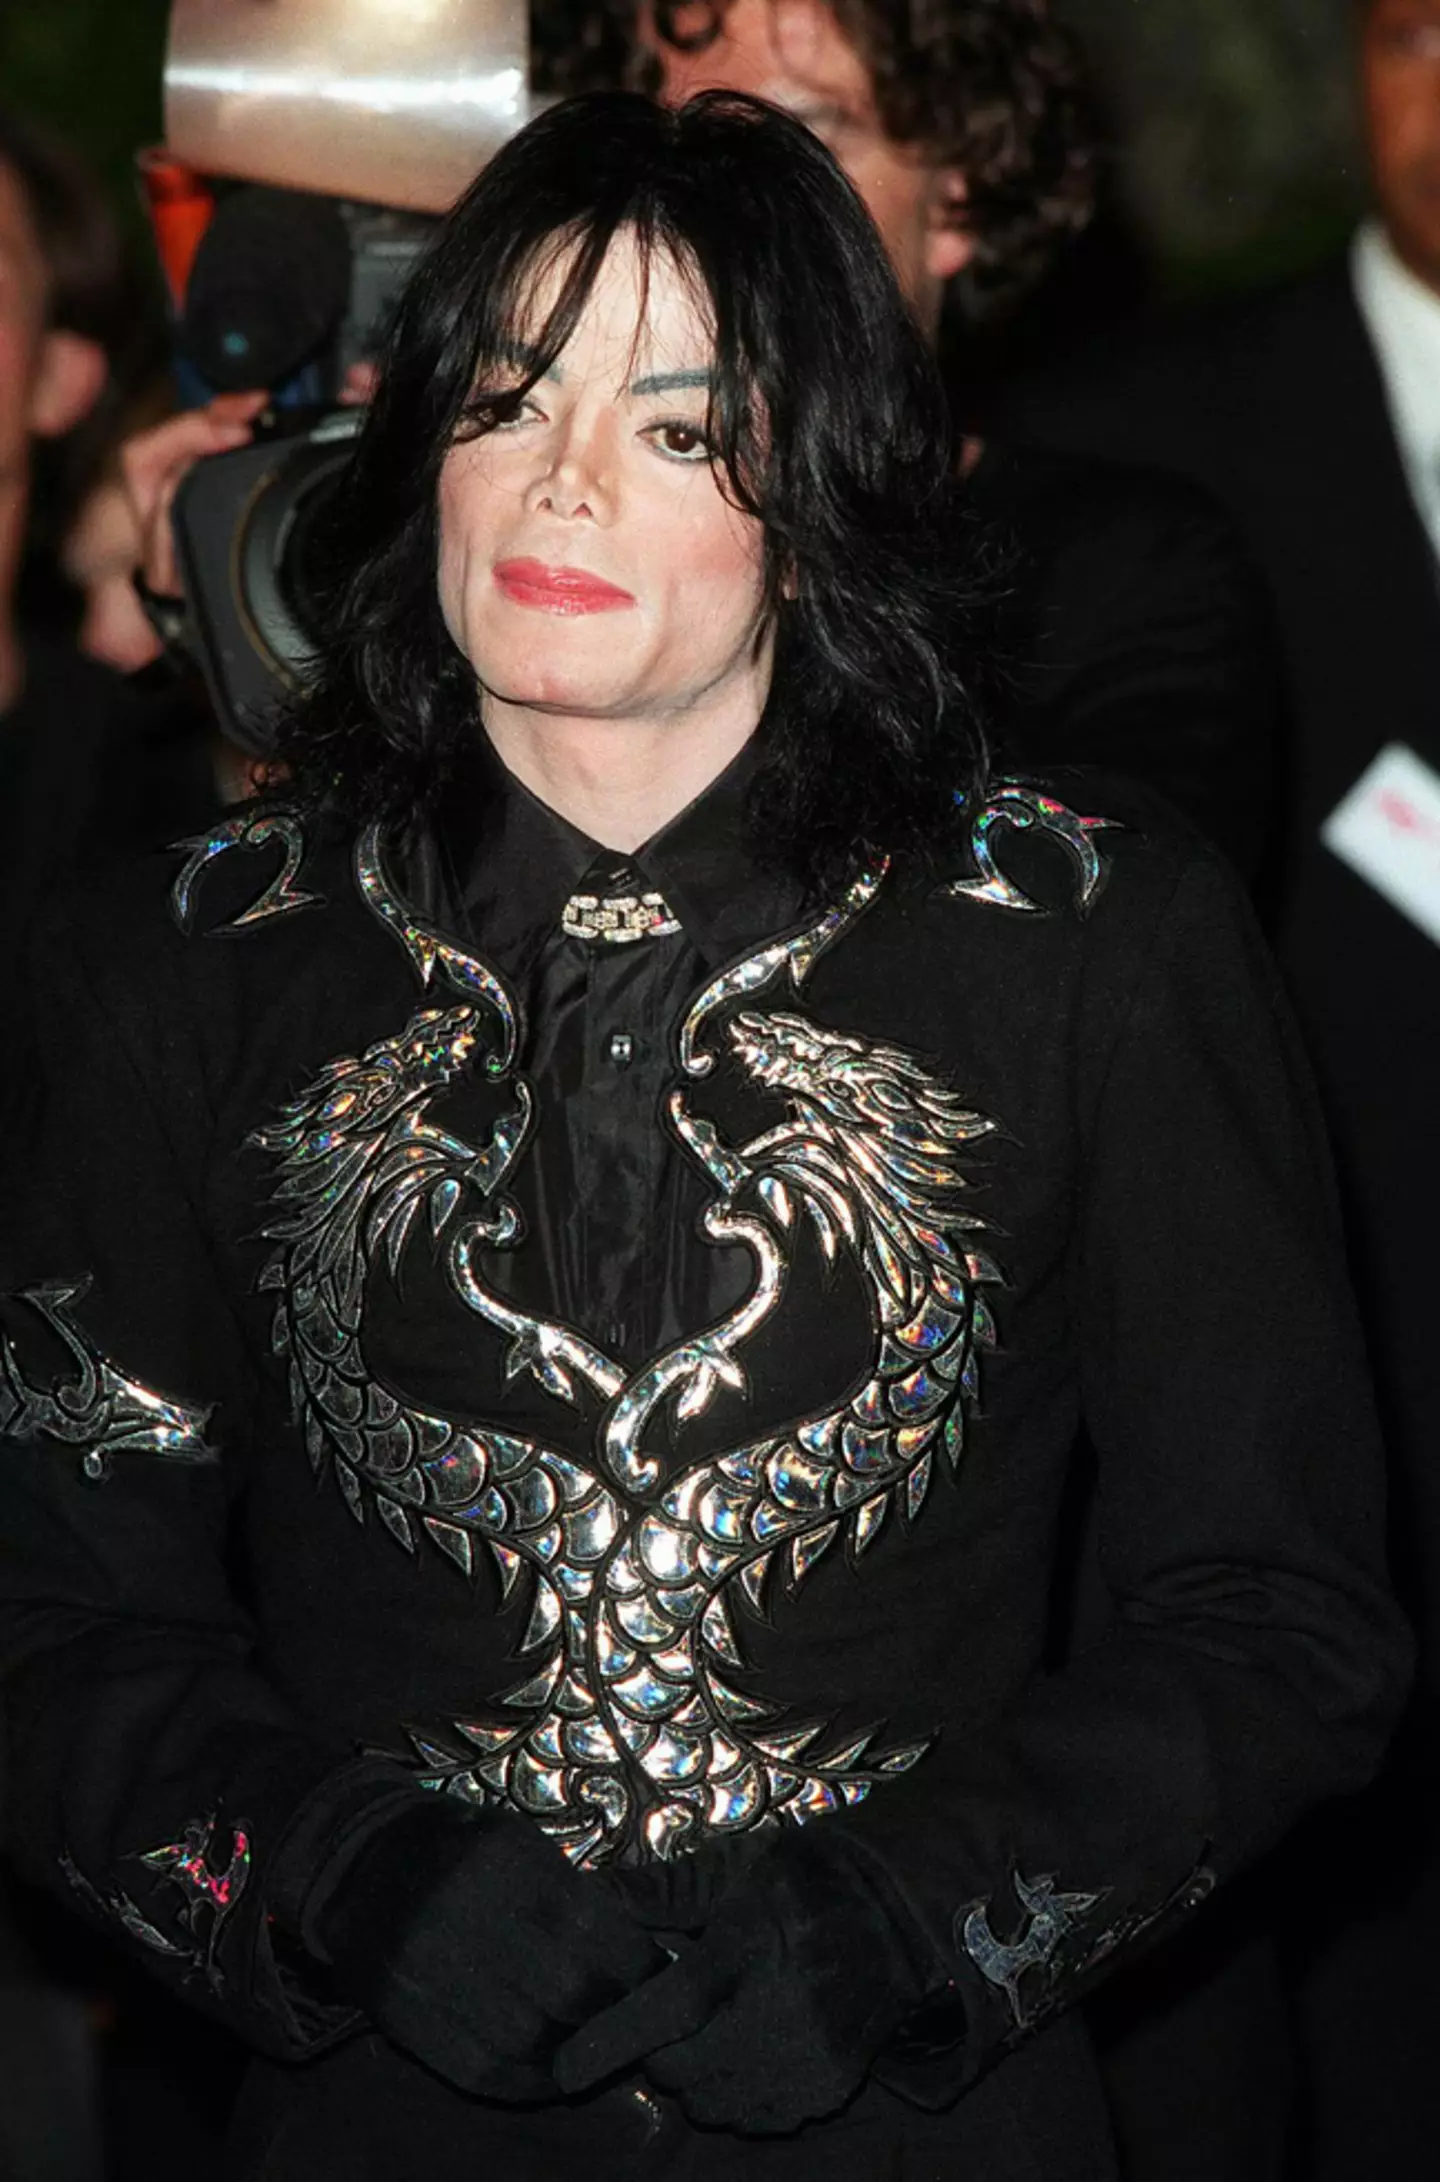 Since his death, allegations have come out against Michael Jackson.